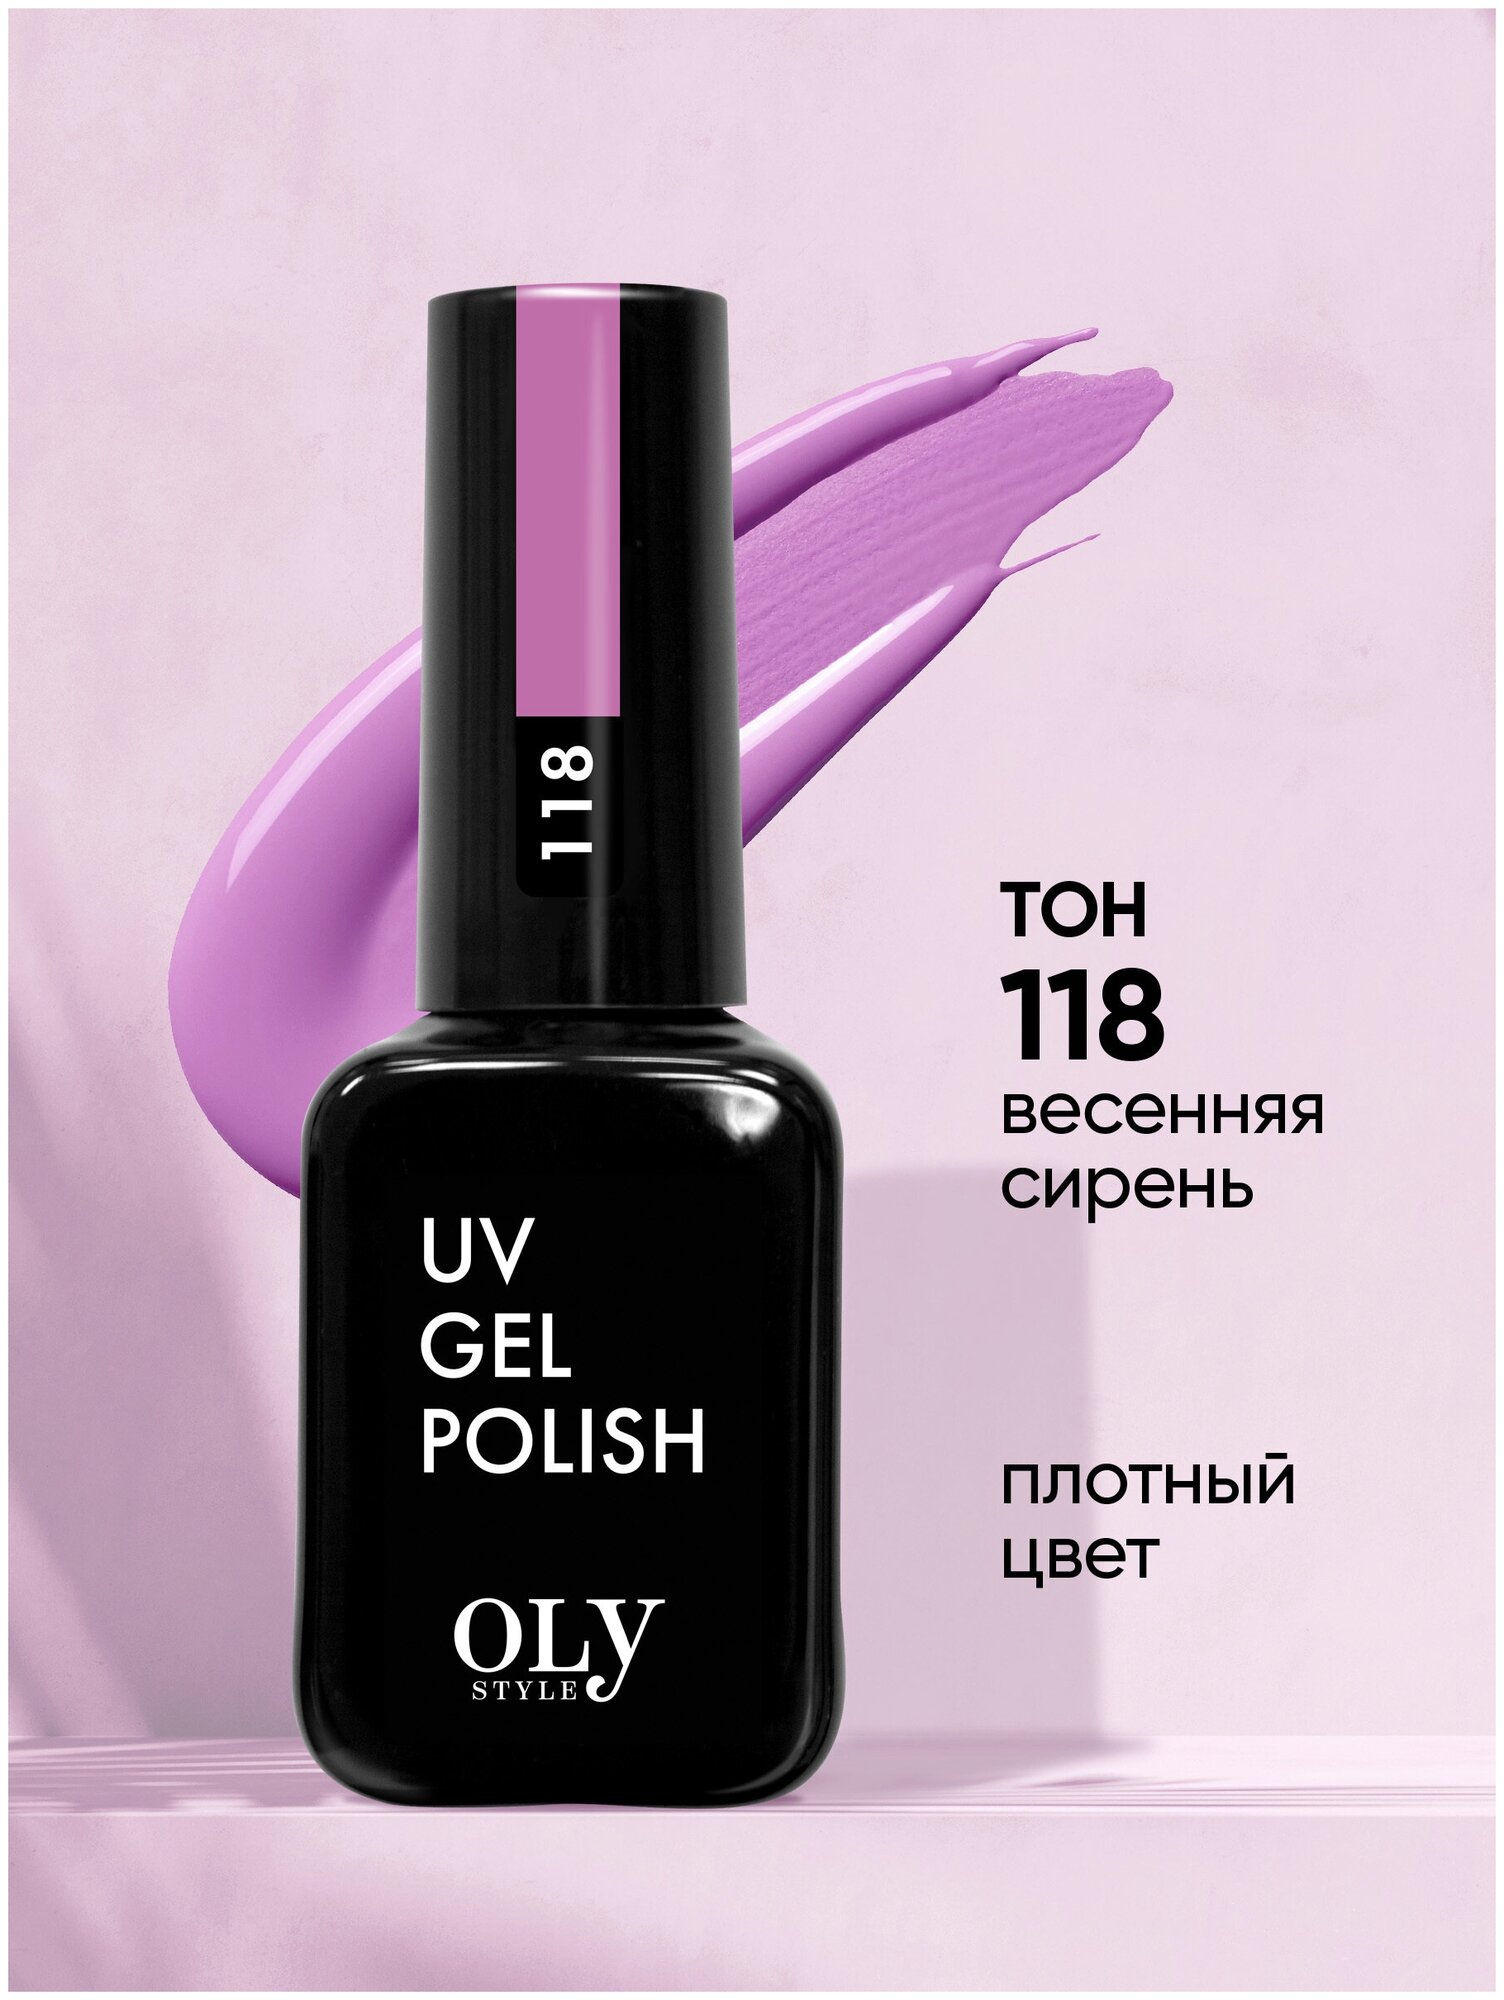 Olystyle Гель-лак для ногтей OLS UV, тон 118 весенняя сирень